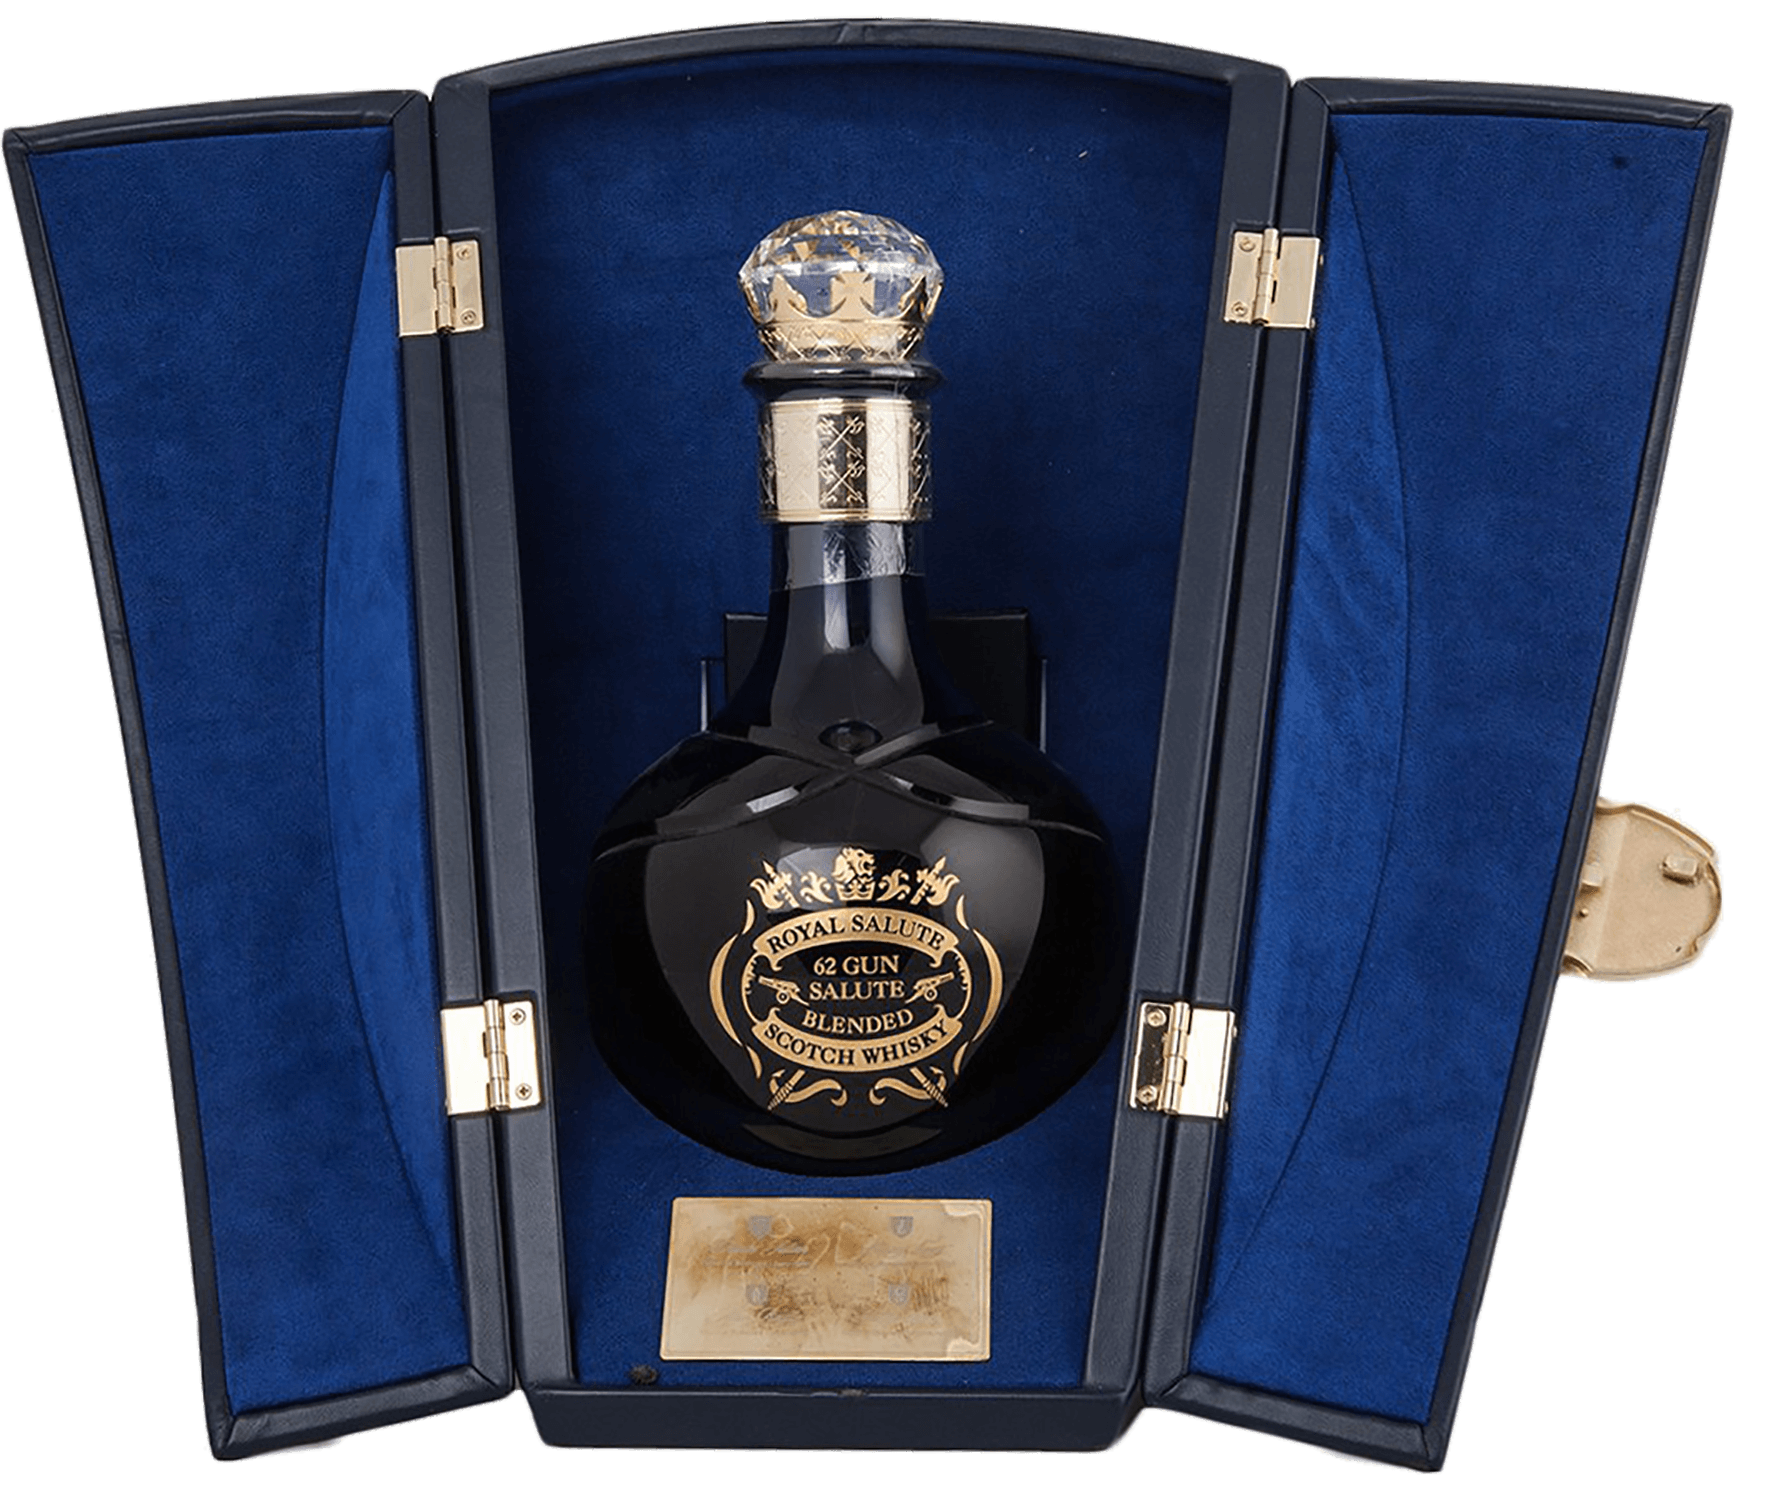 Chivas Regal Royal Salute 62 Gun Salute blended scotch whisky (gift box)